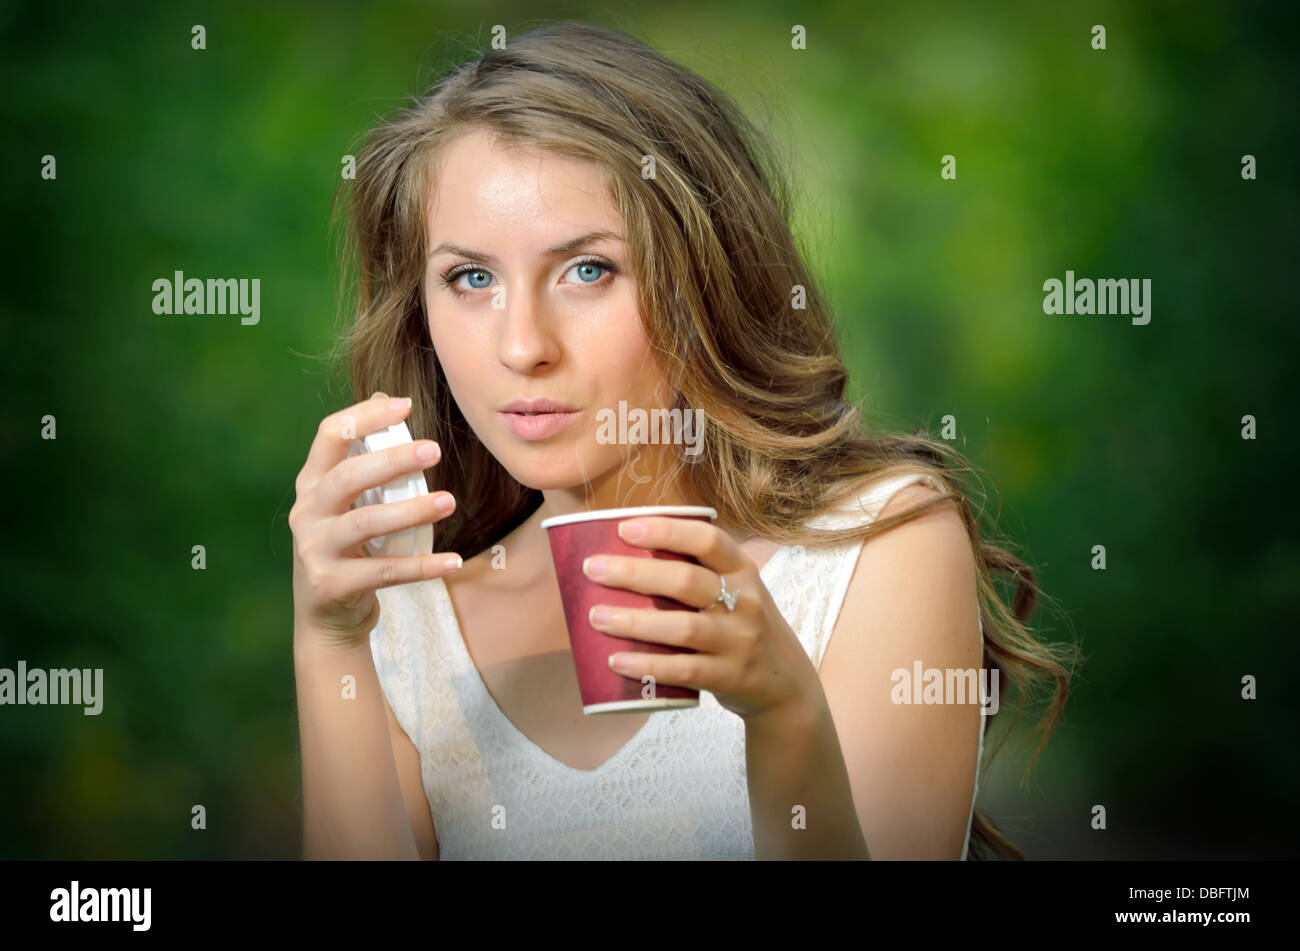 Beautiful Girl Drinking Coffee in Nature Stock Photo